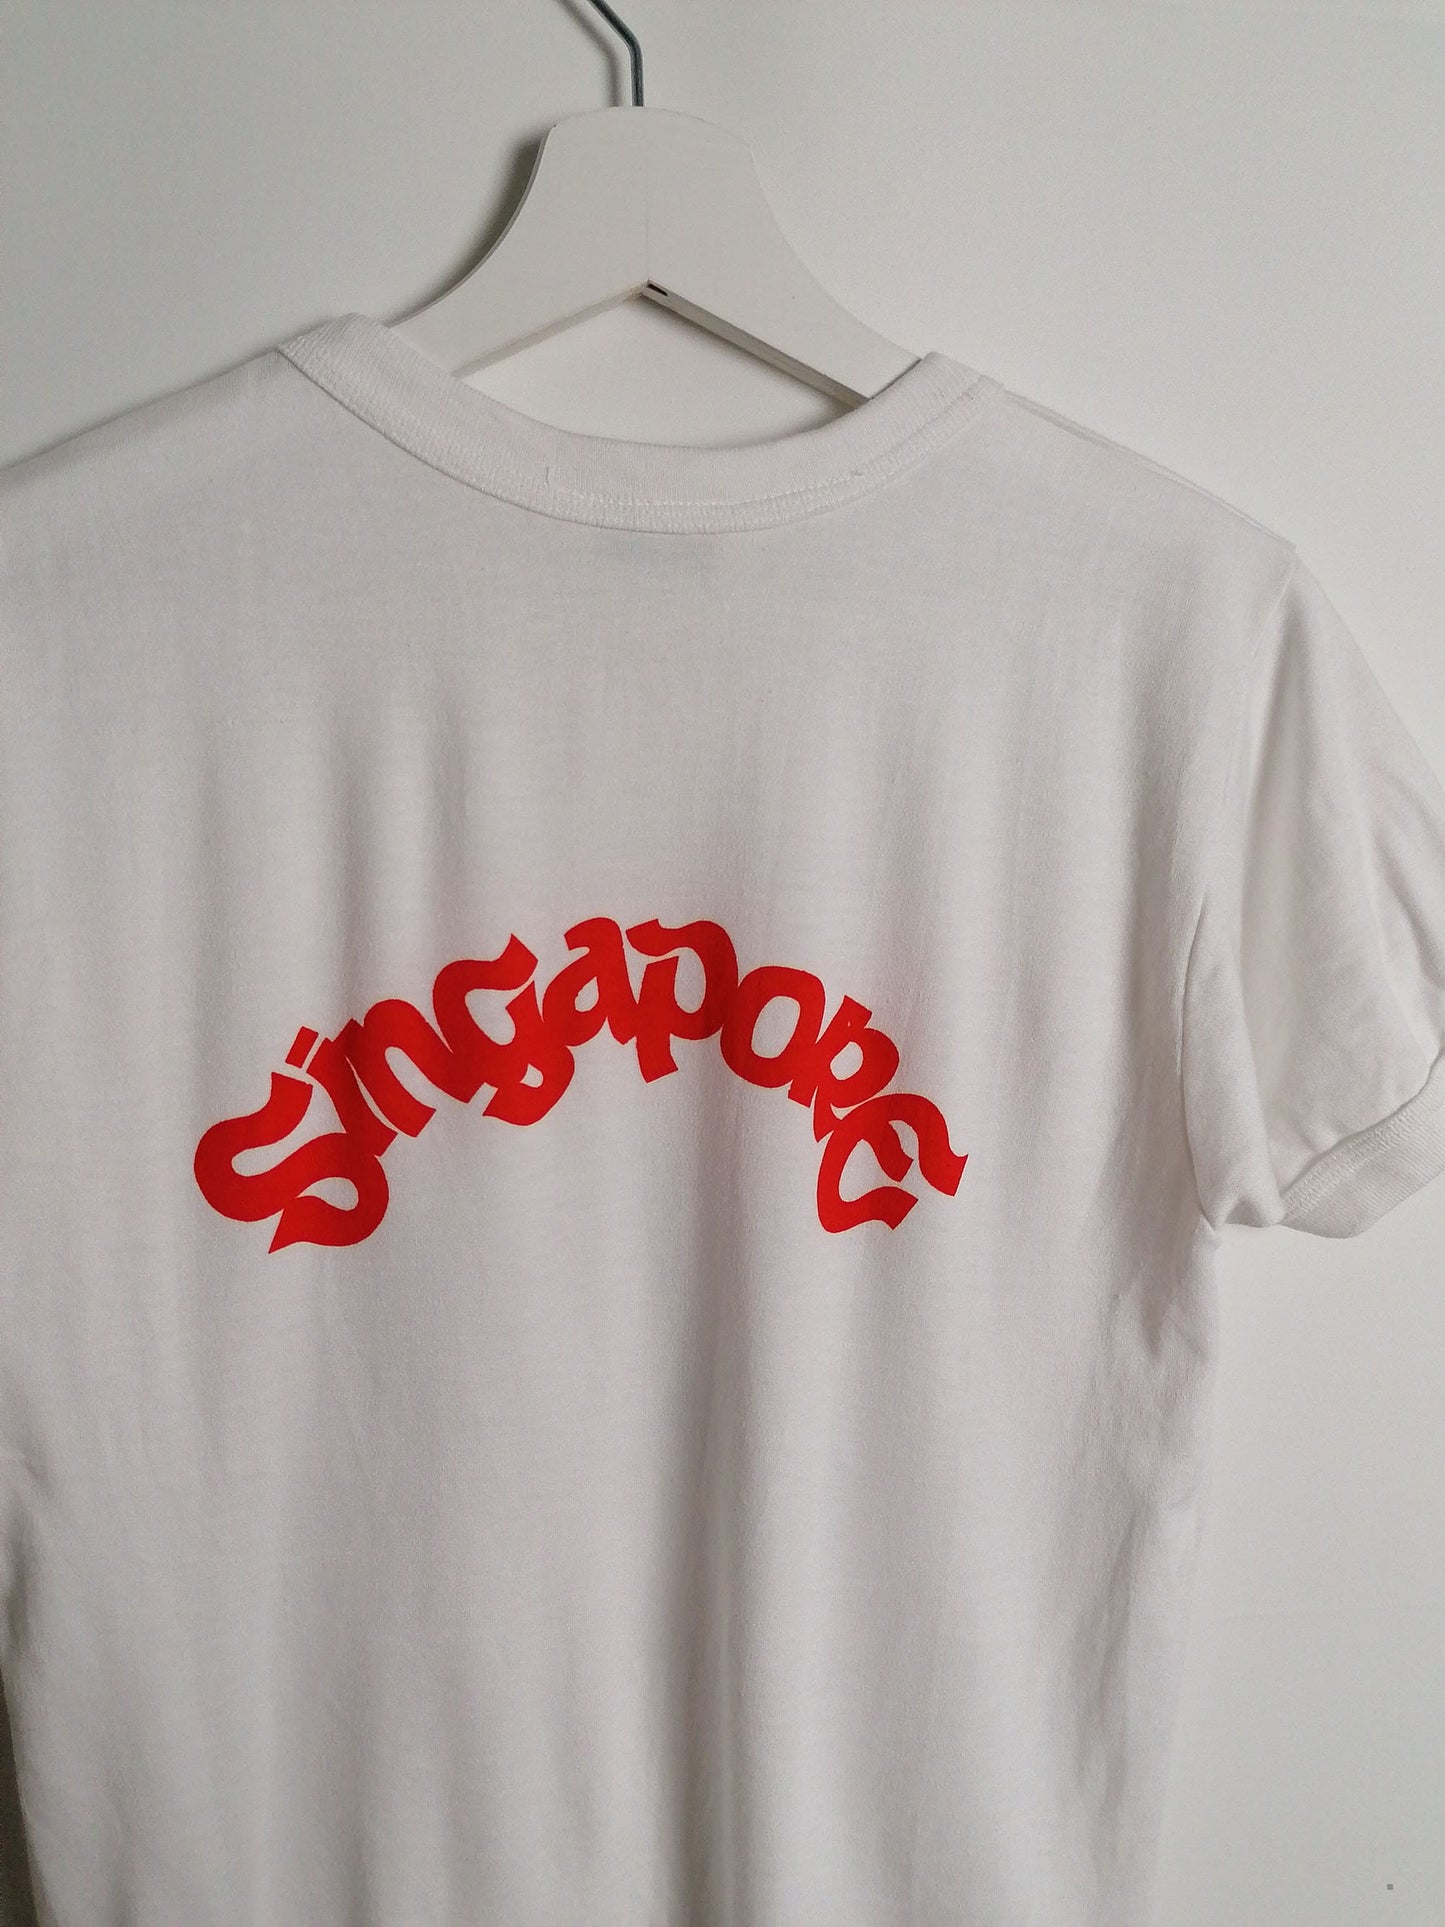 Vintage 80's 90's Singapore Ringer Single Stitch T-shirt - size S